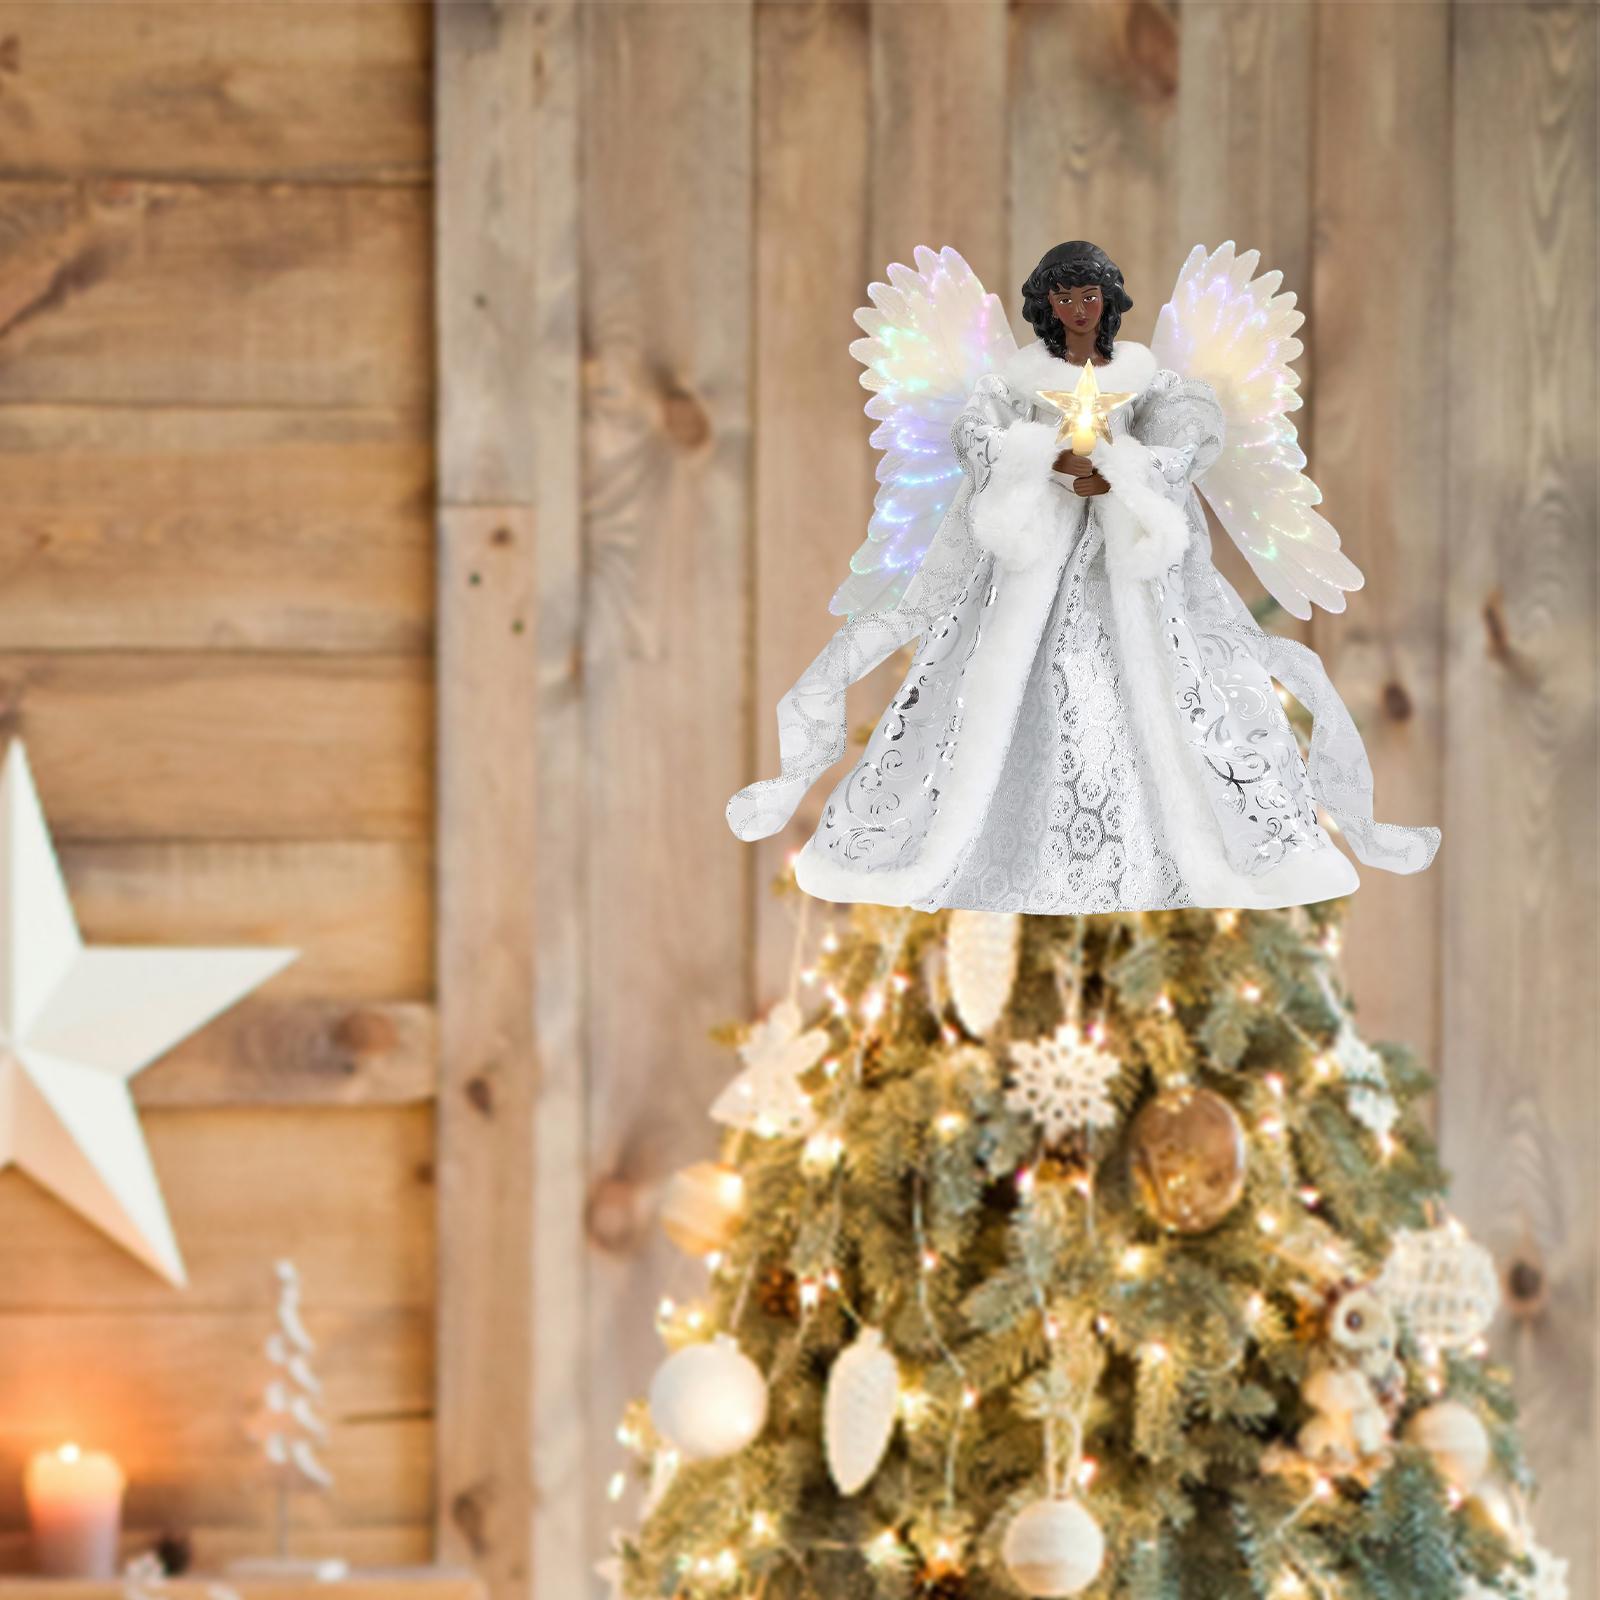 Angel Christmas Treetop Figurine 25*20cm Mall Desktop with Lights Star